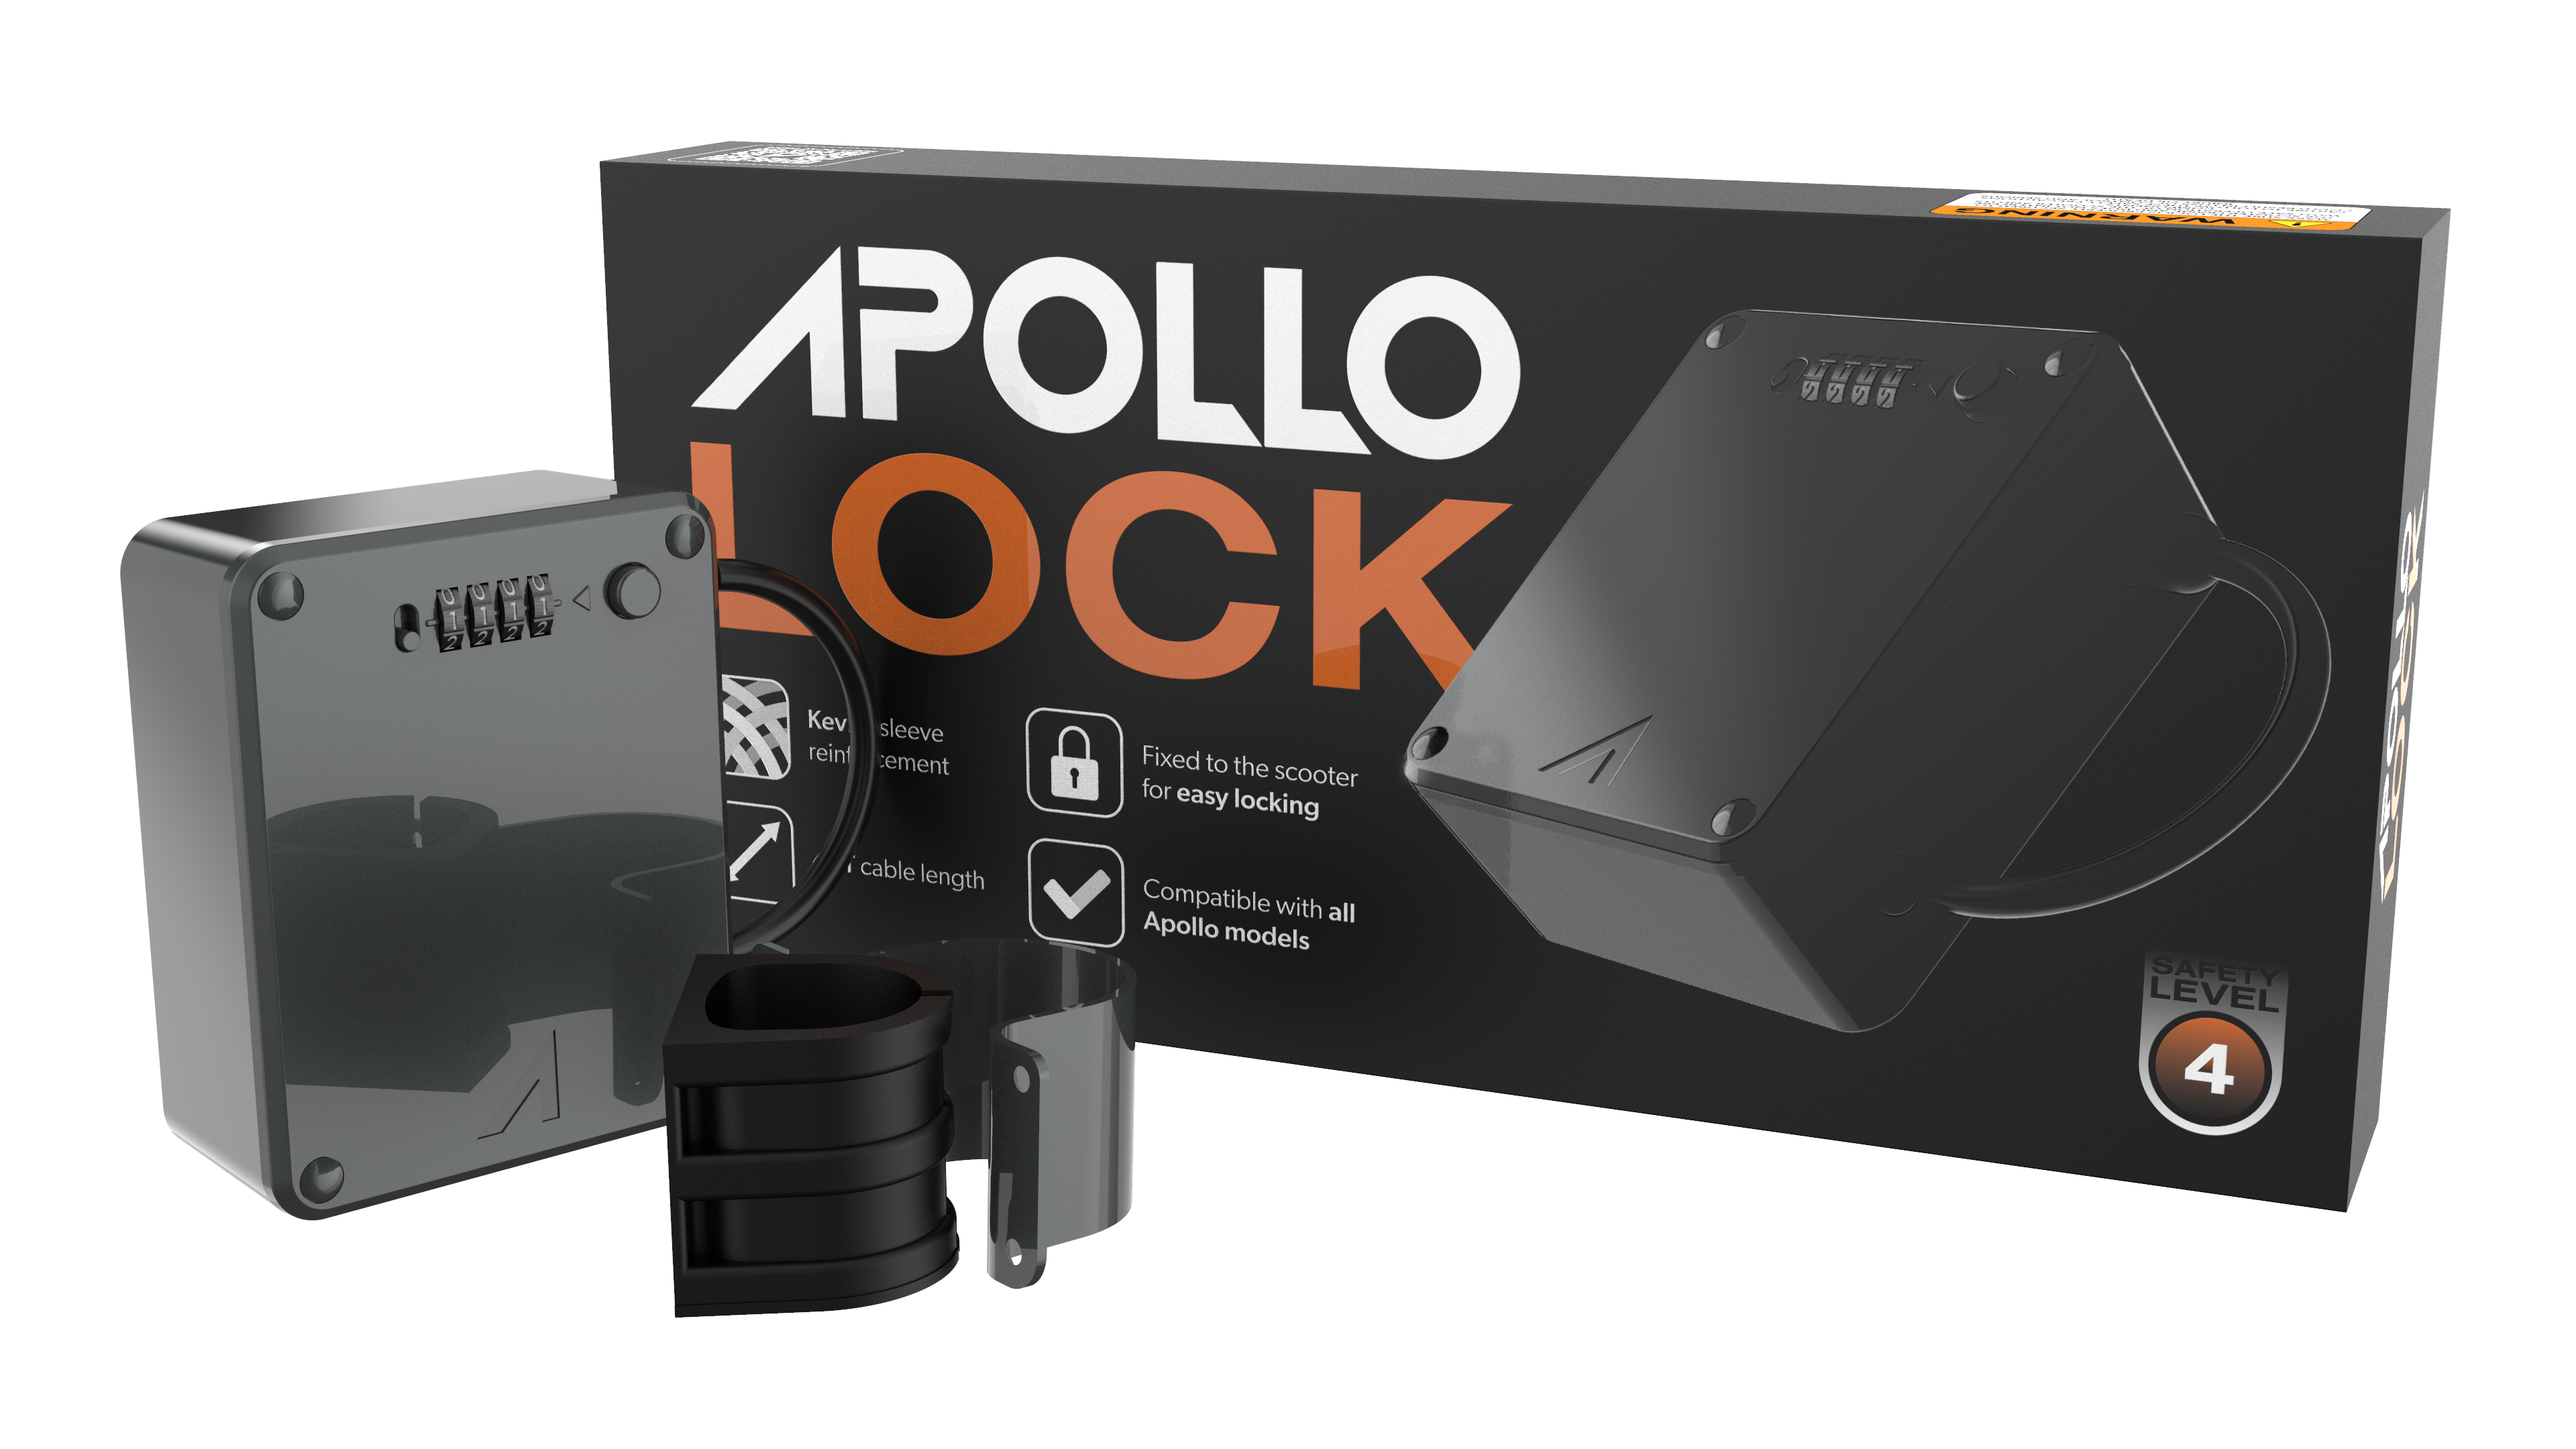 Apollo Lock